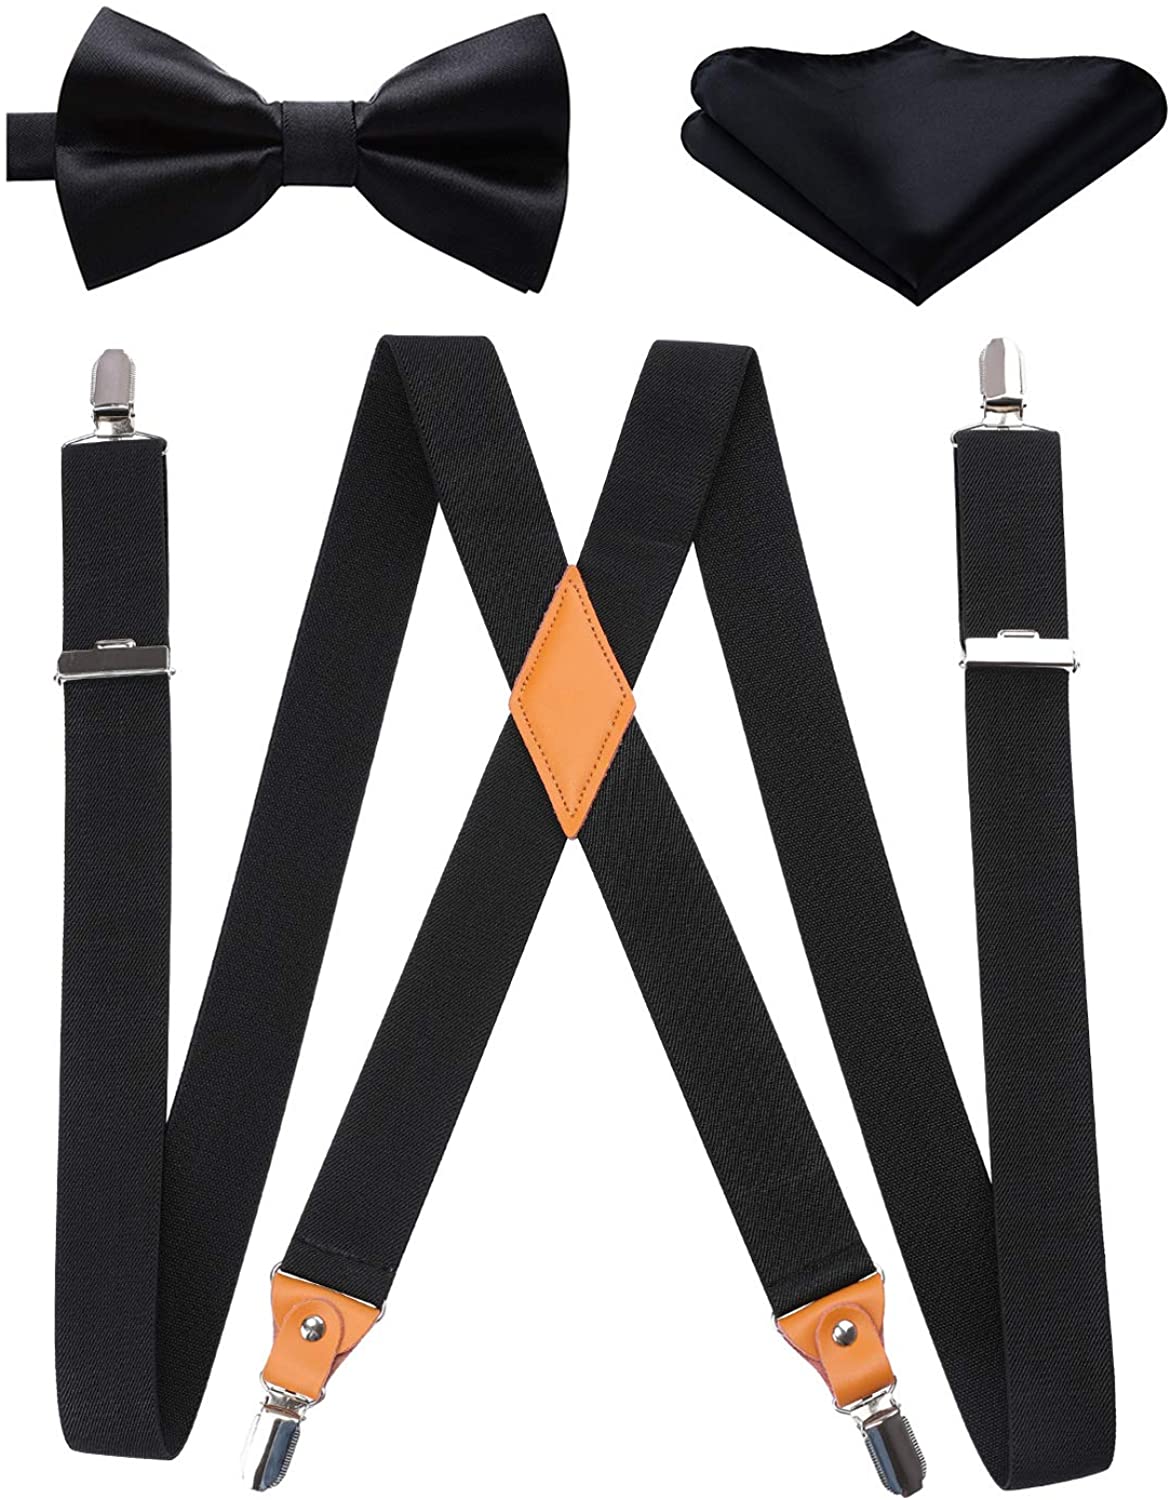 Formal Man Wear Suspenders Fix Bow Stock Photo 1824562943